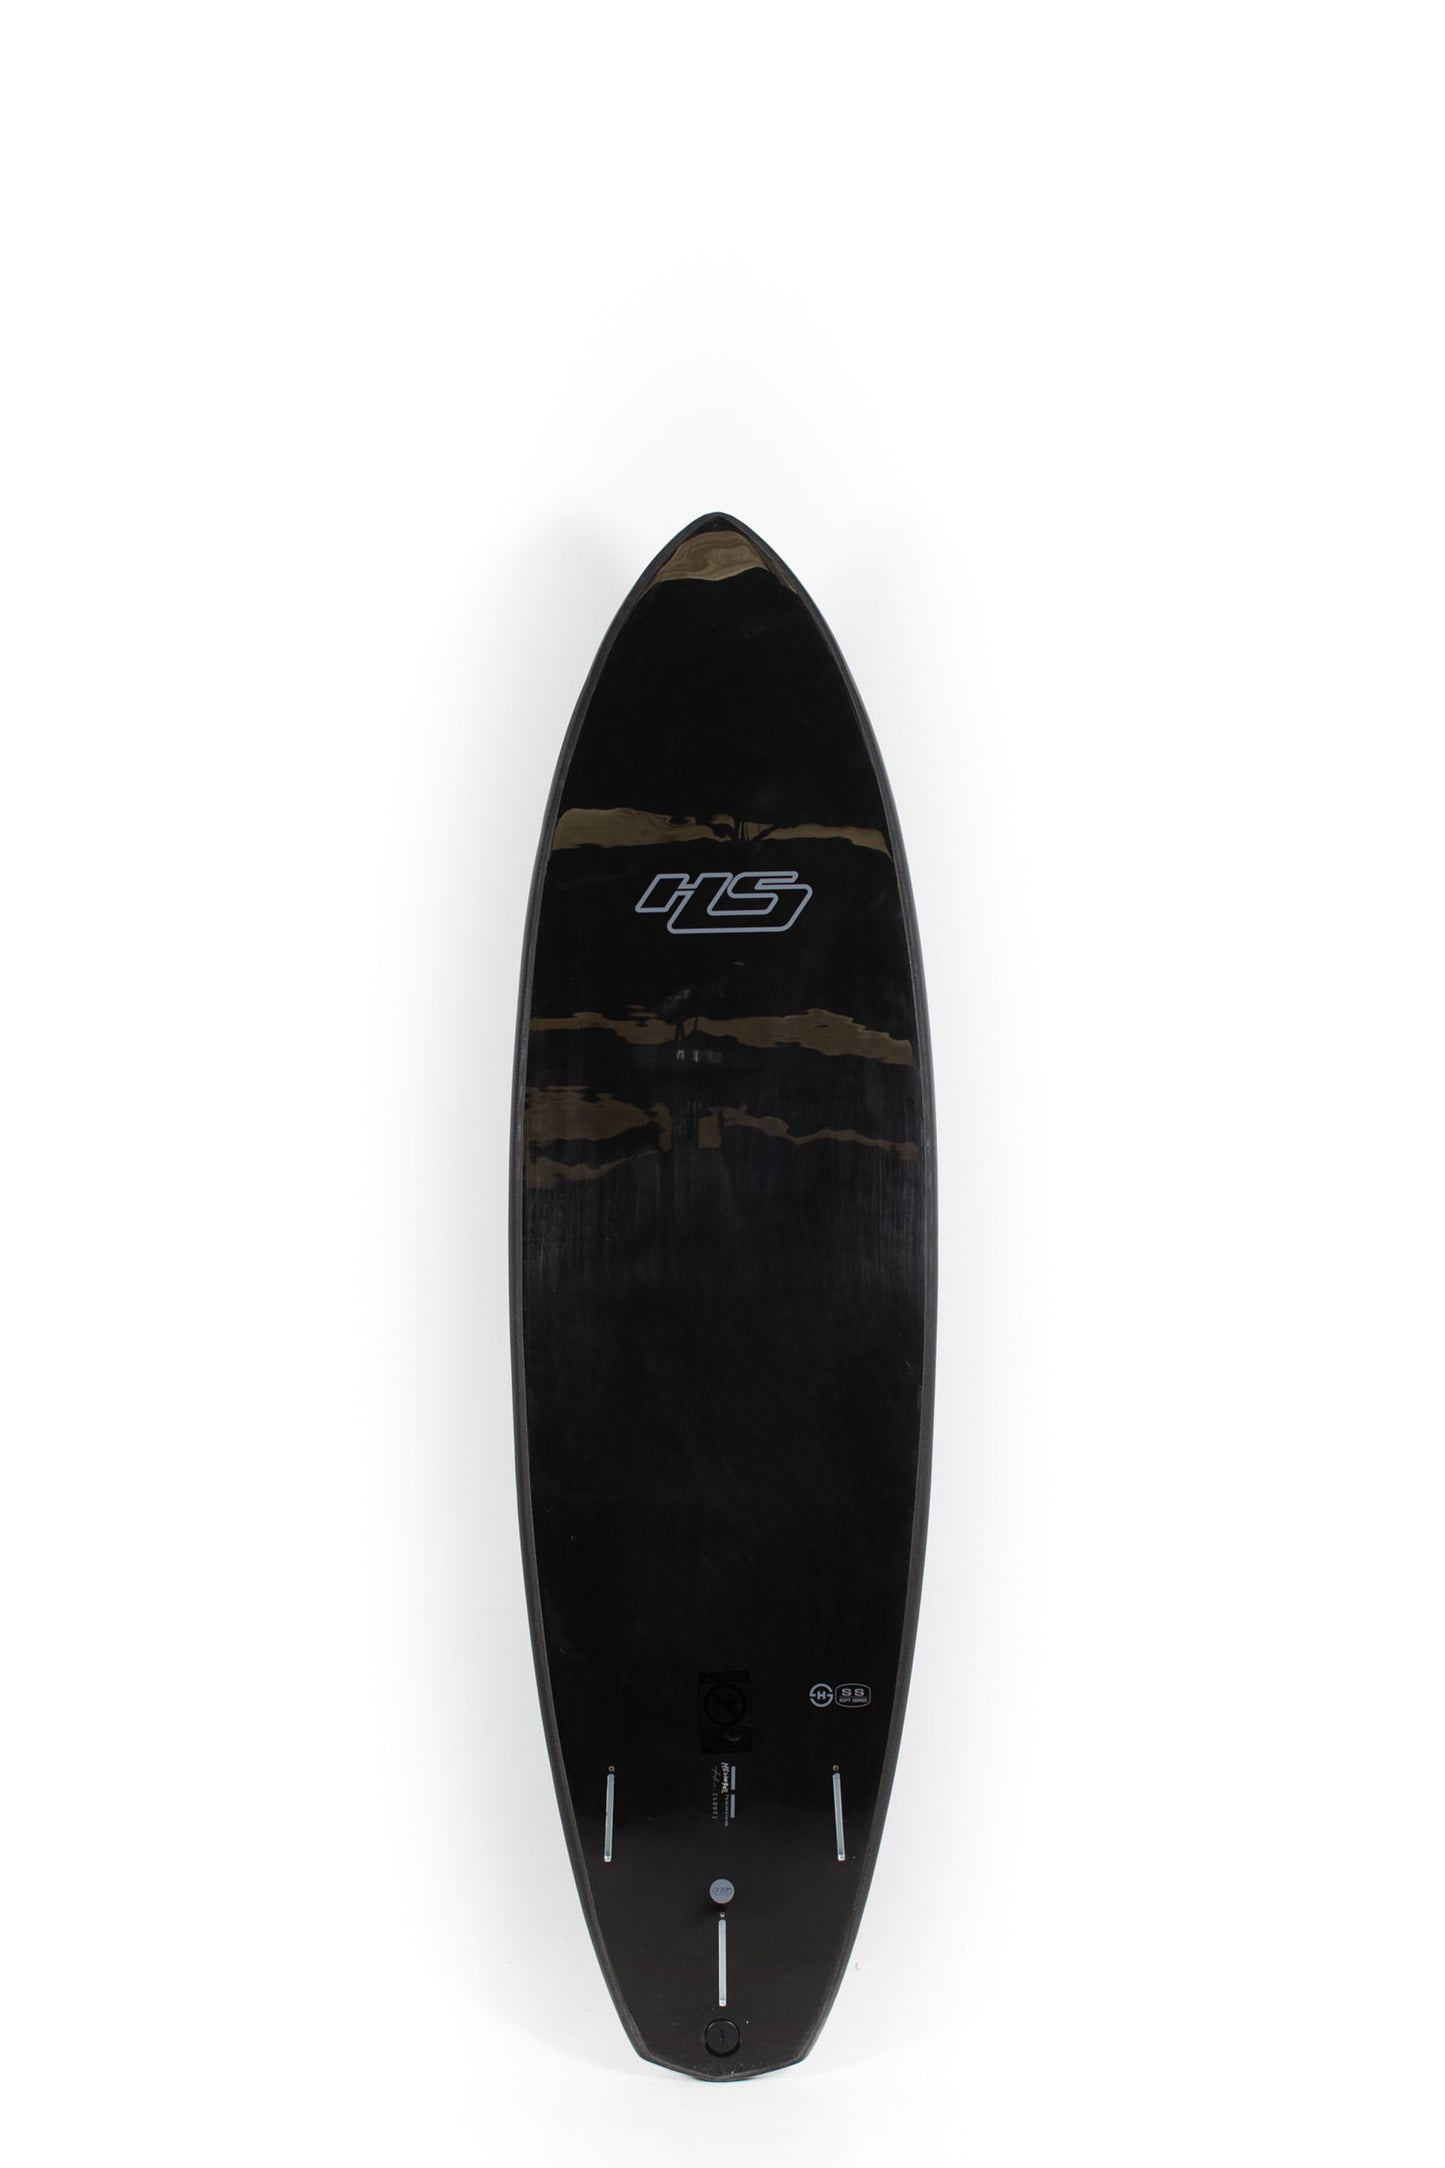 Pukas Surf Shop - HaydenShapes Surfboard - LOOT - 7'0" x 22 1/2" x 3 1/4" x 58L - SOFTLOOT-BLK